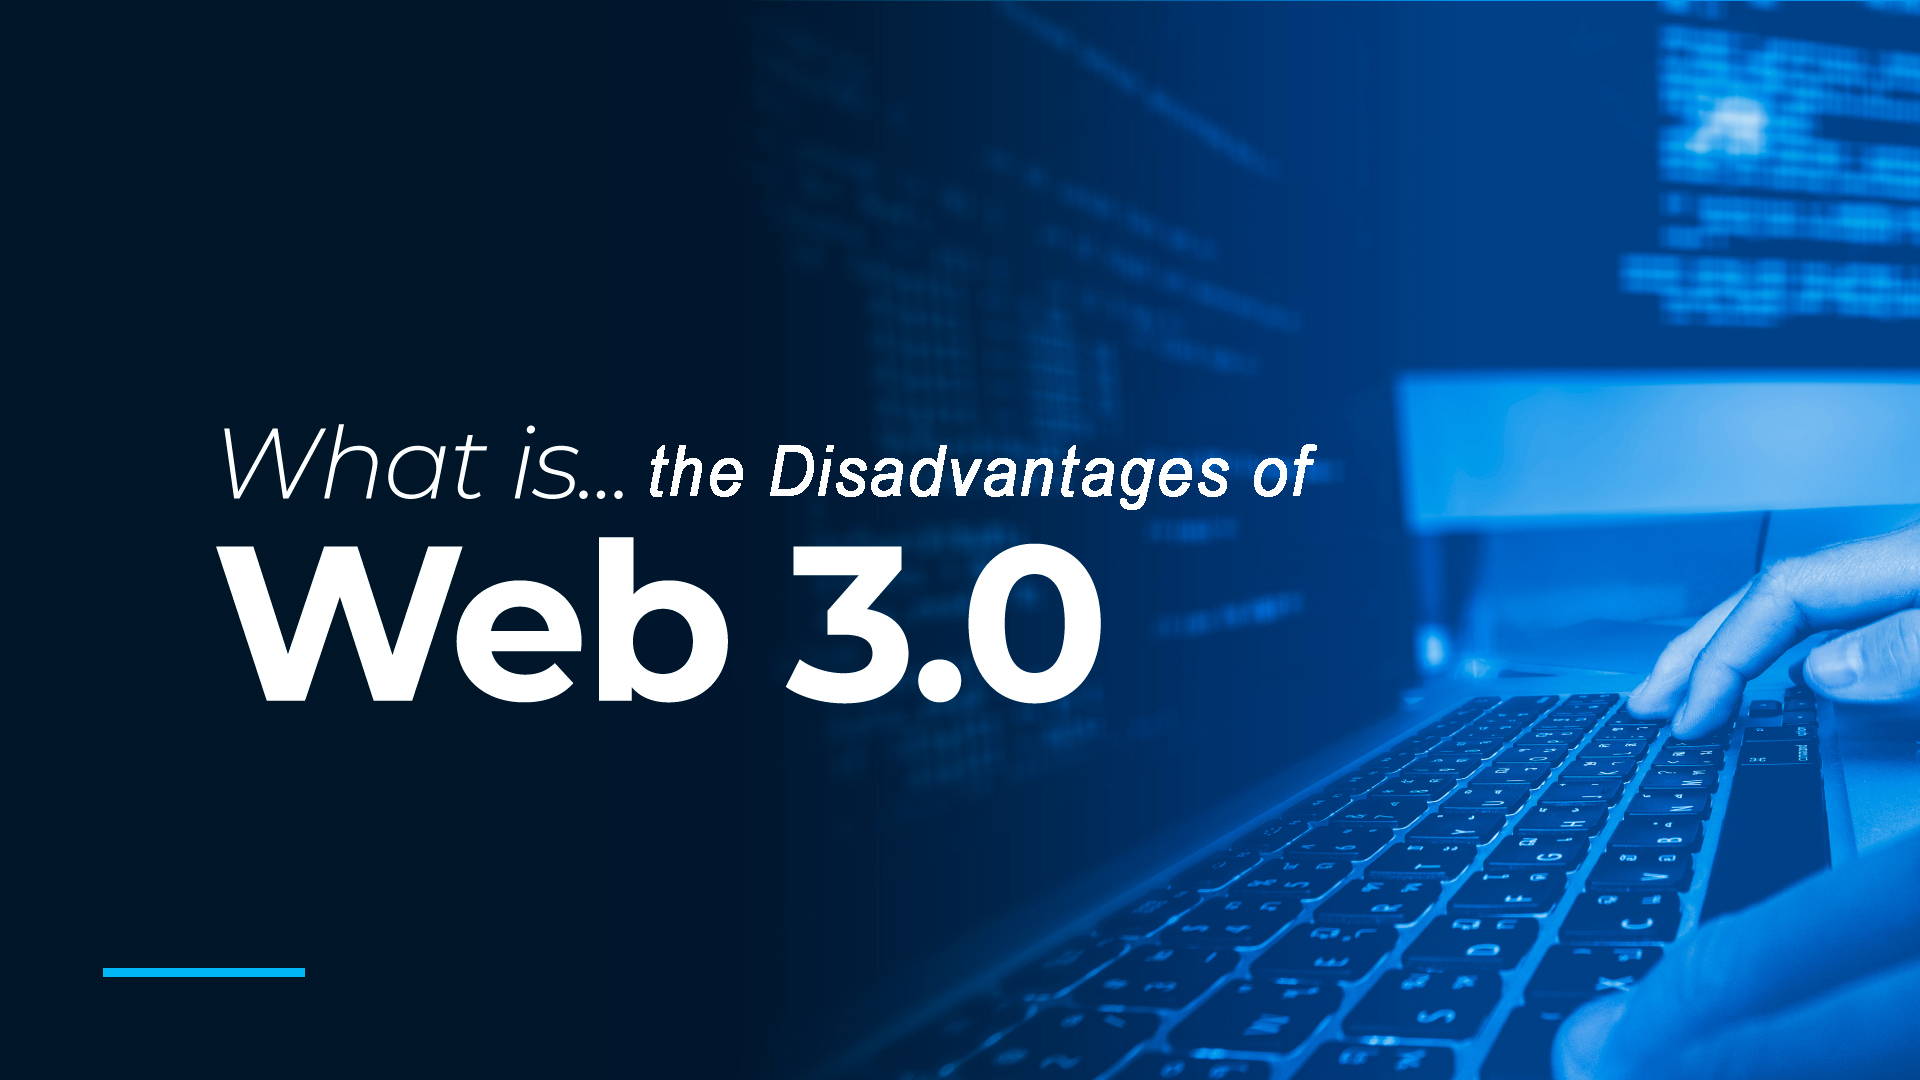 Disadvantages of Web 3.0